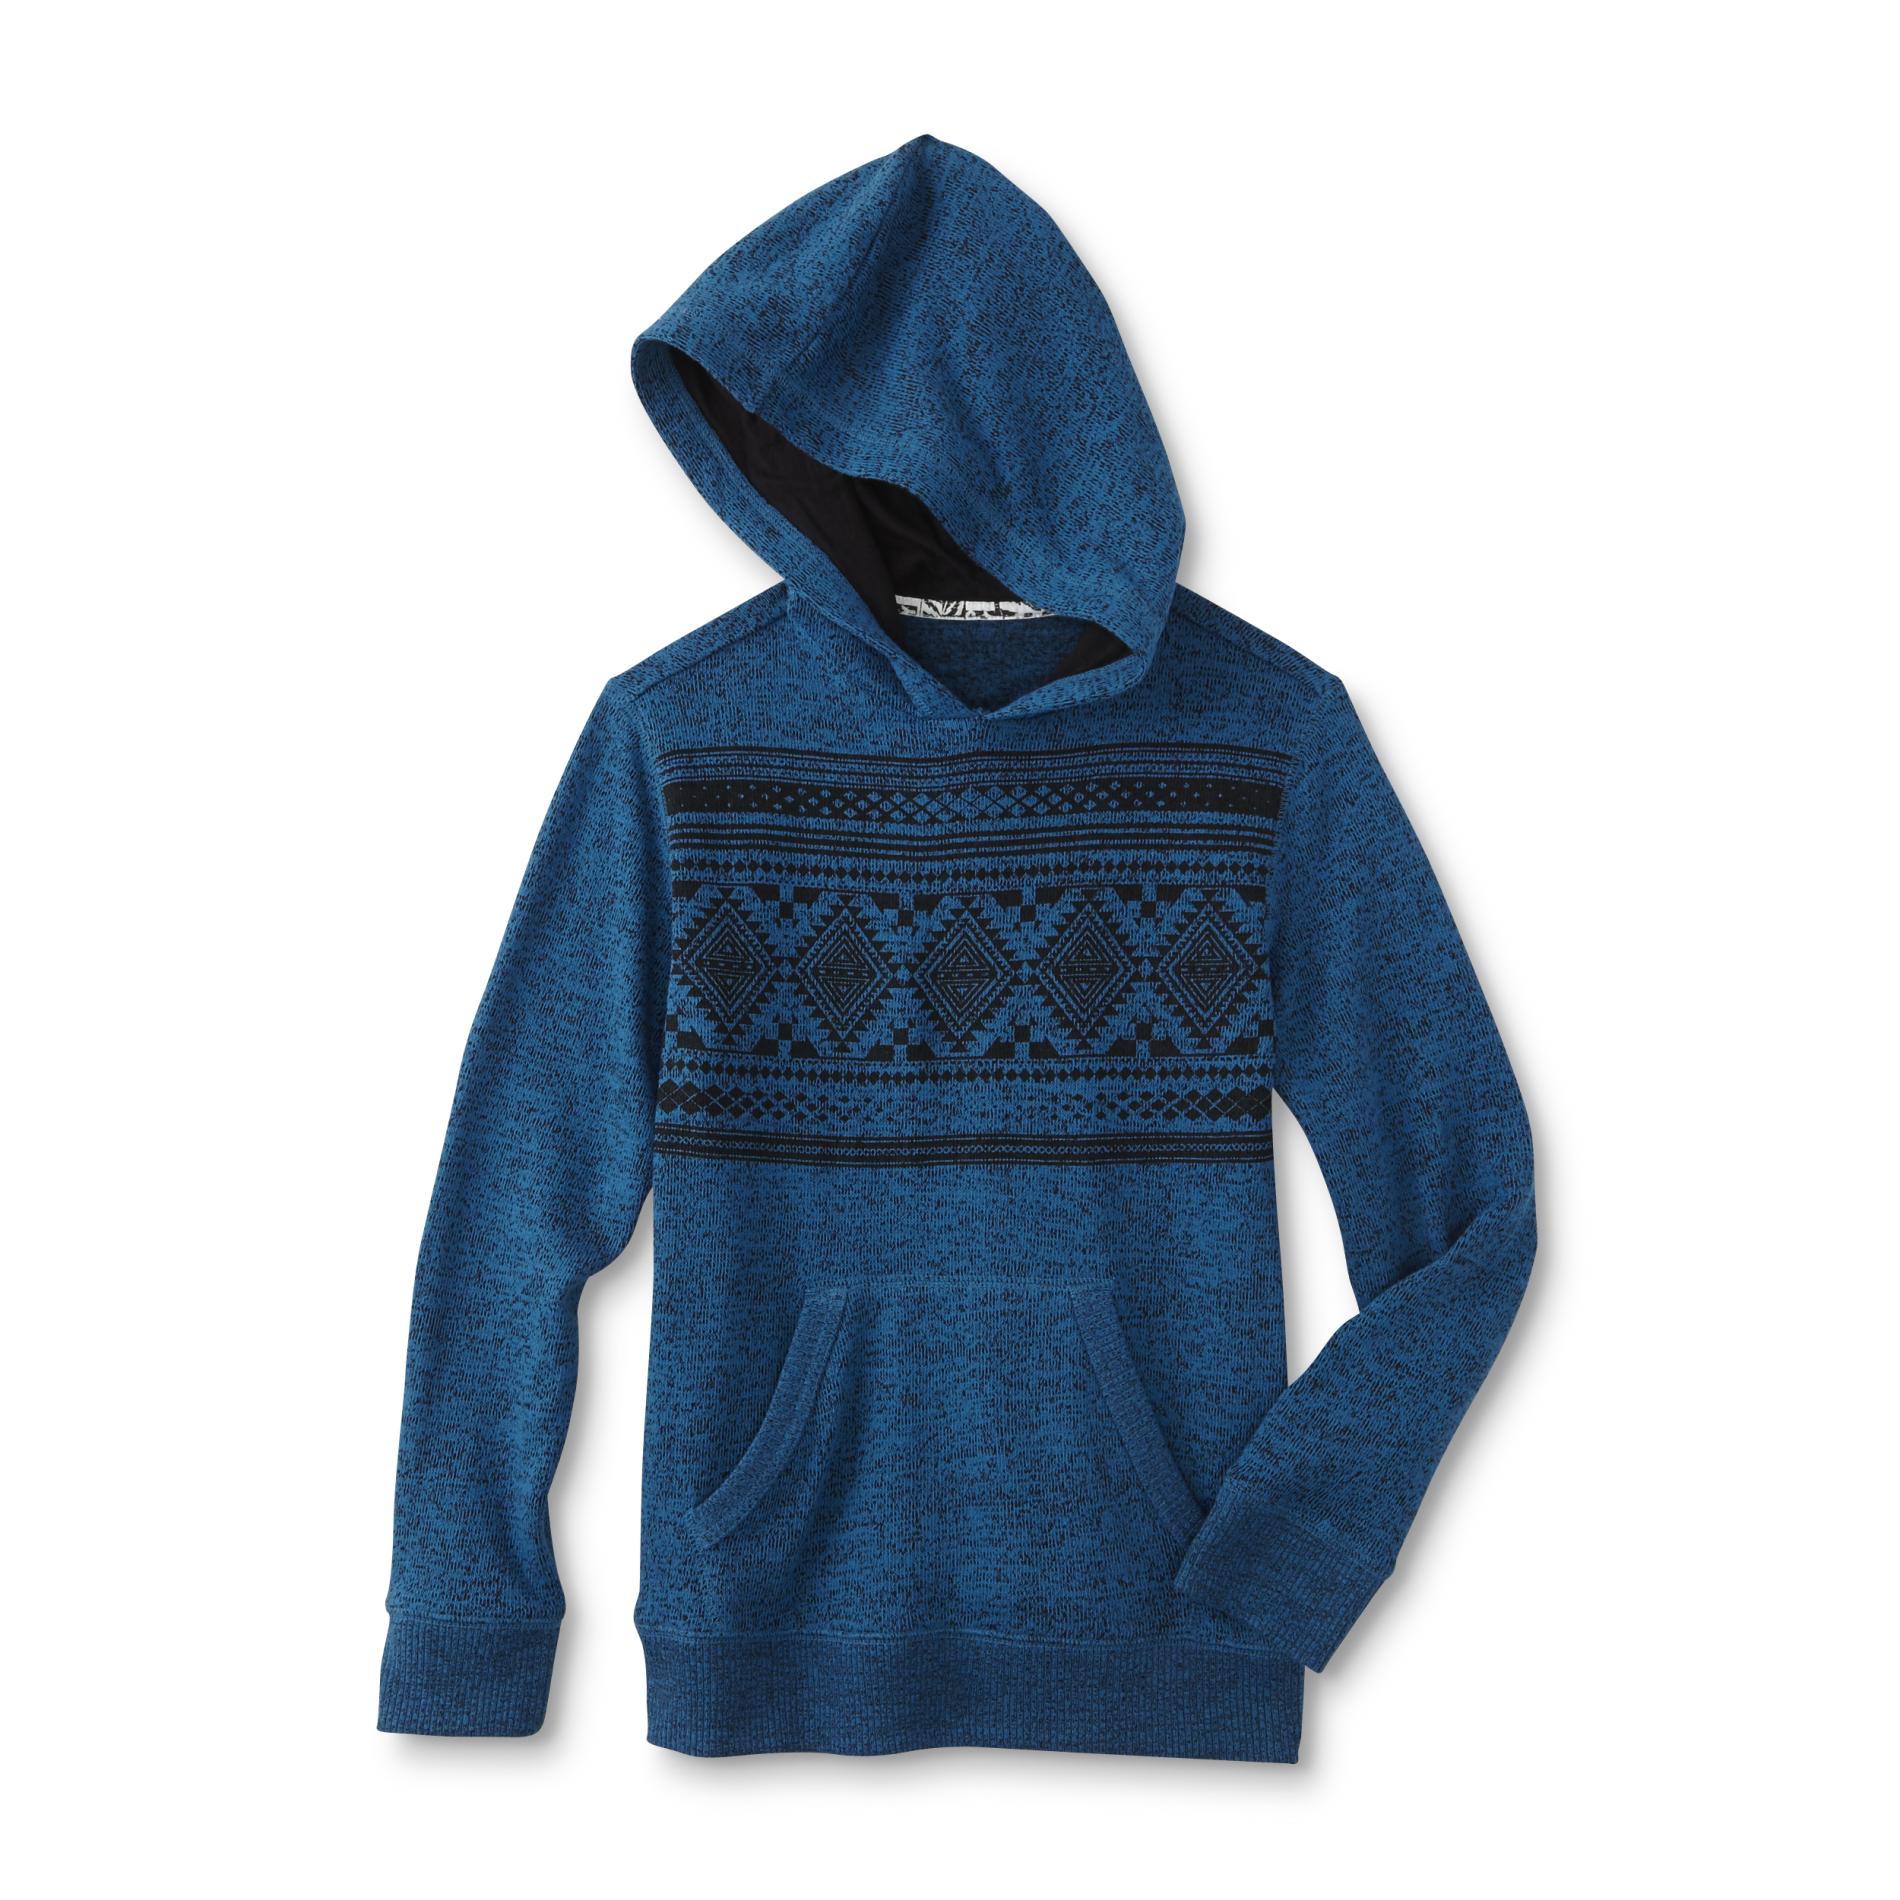 Amplify Boys' Hooded Sweater - Tribal